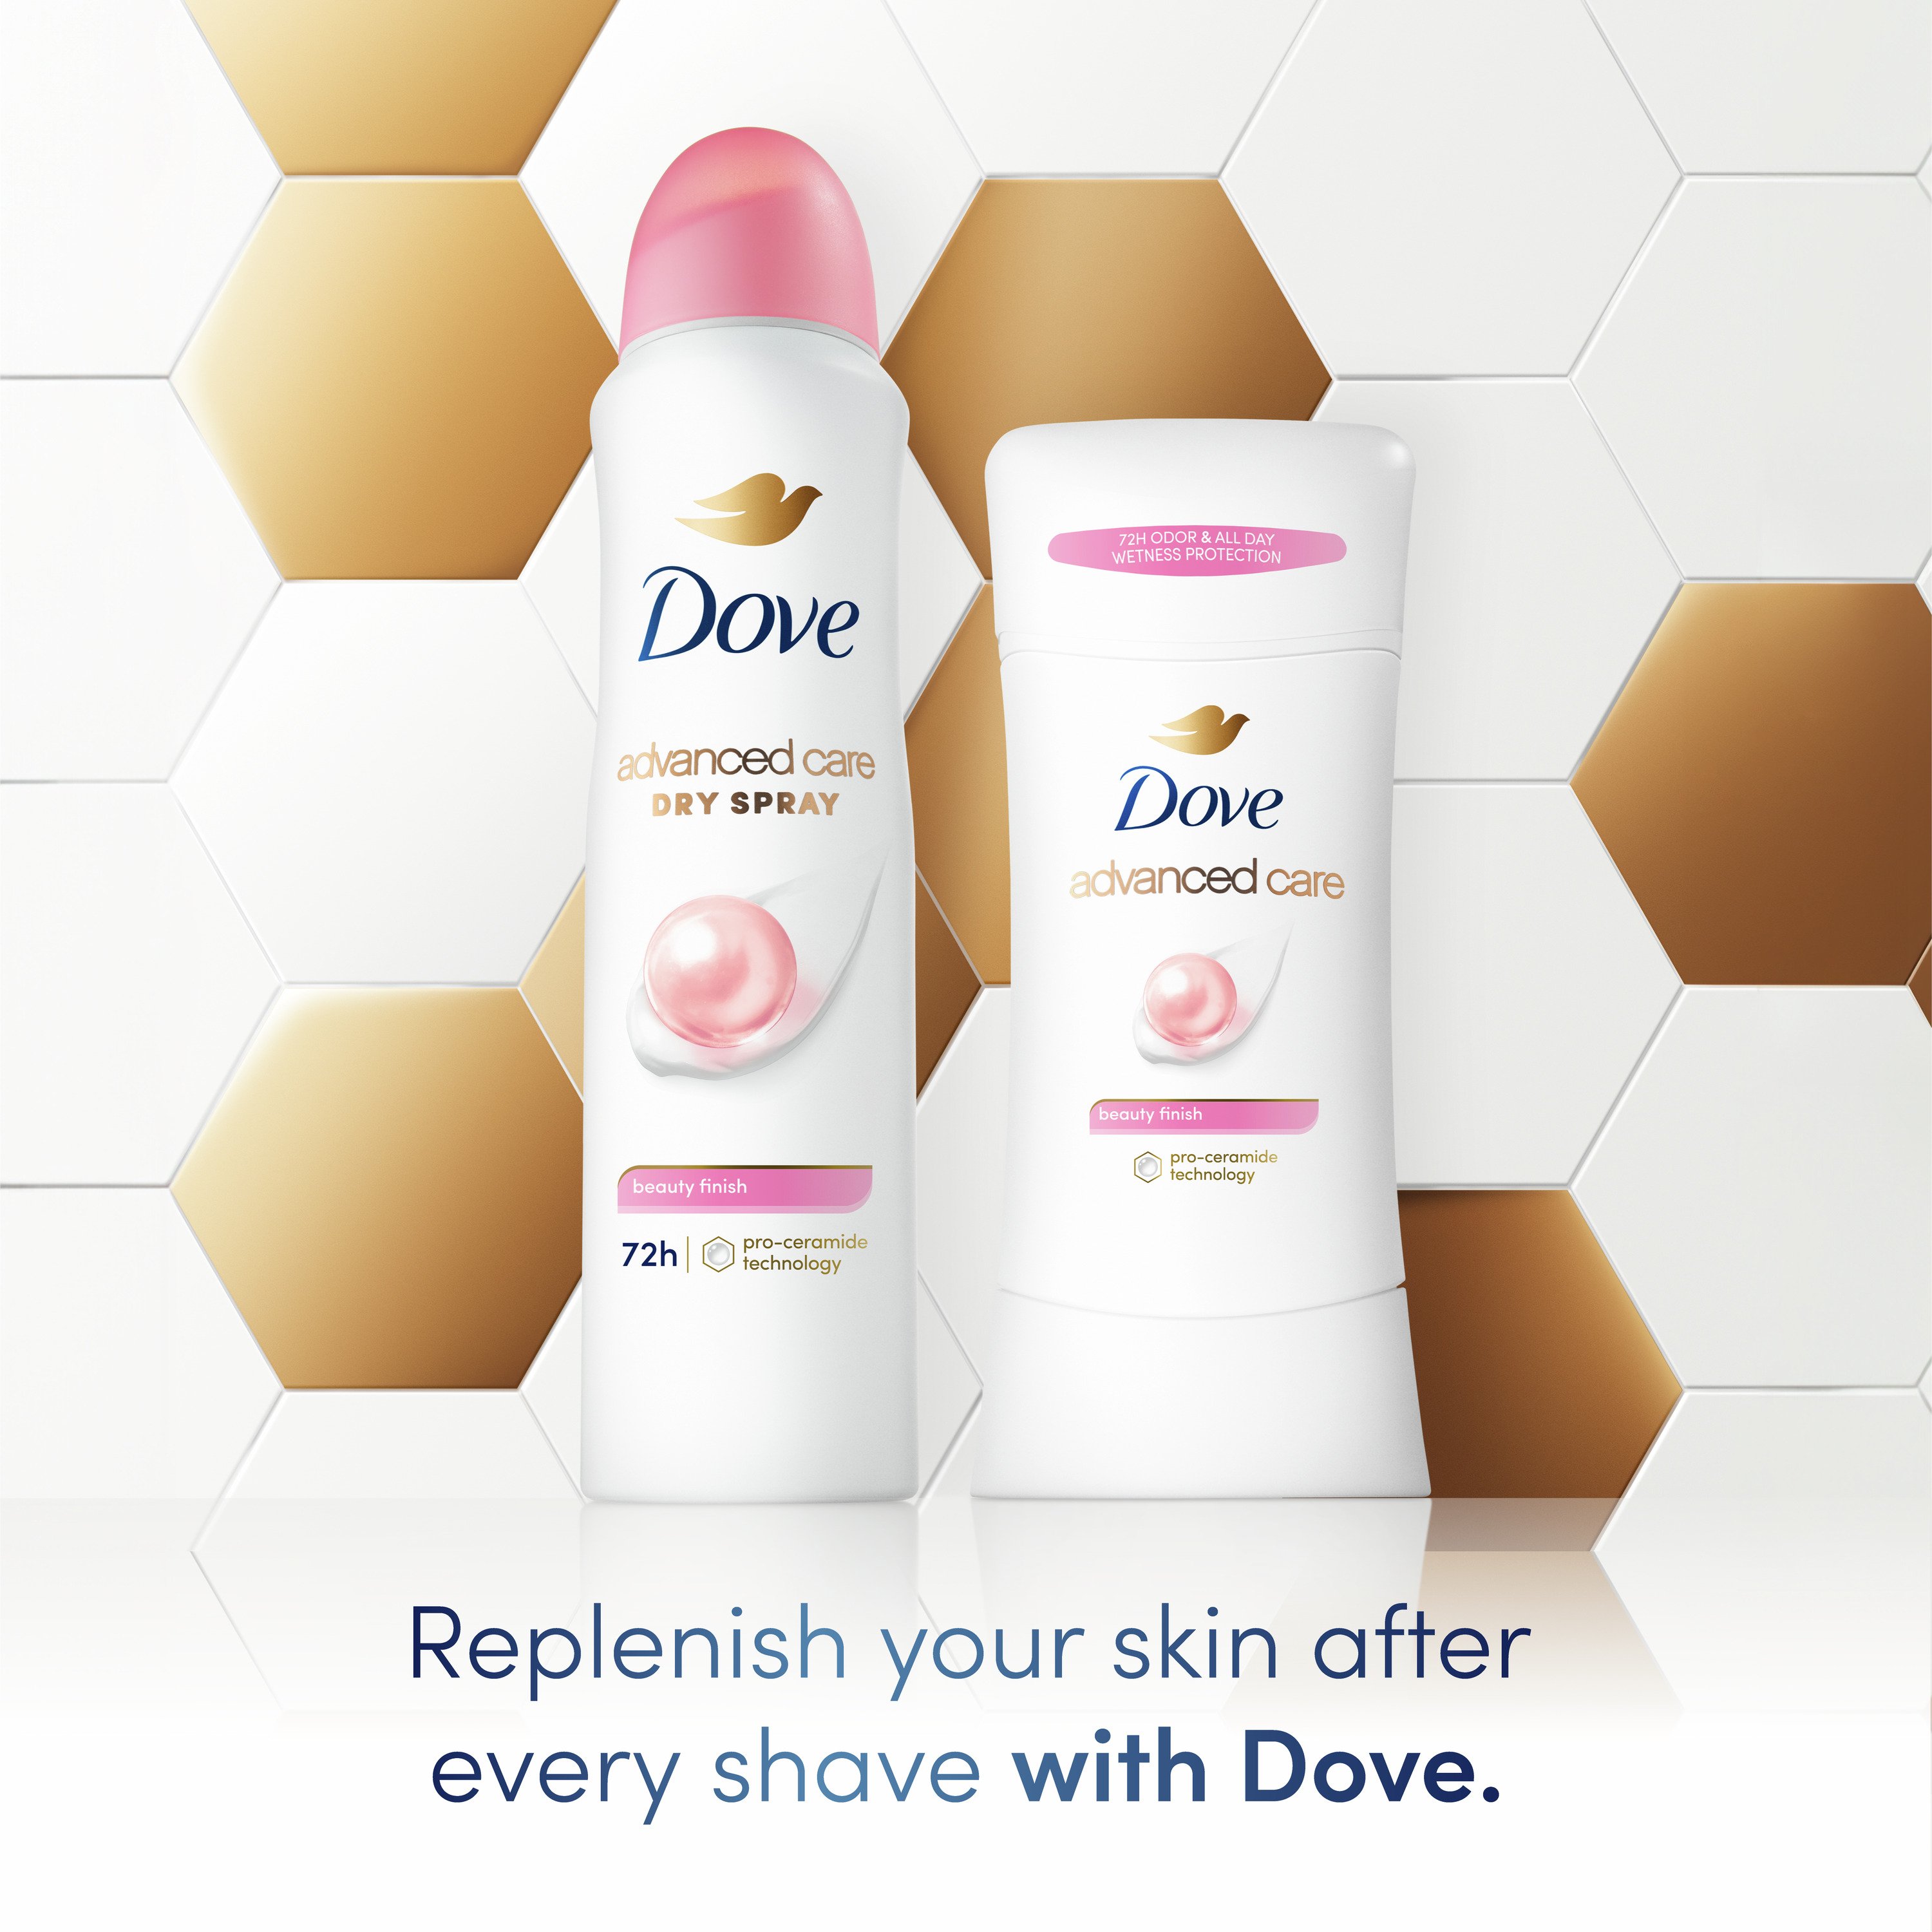 Dove Advanced Care Invisible Dry Spray - Sheer Fresh - Shop Deodorant &  Antiperspirant at H-E-B